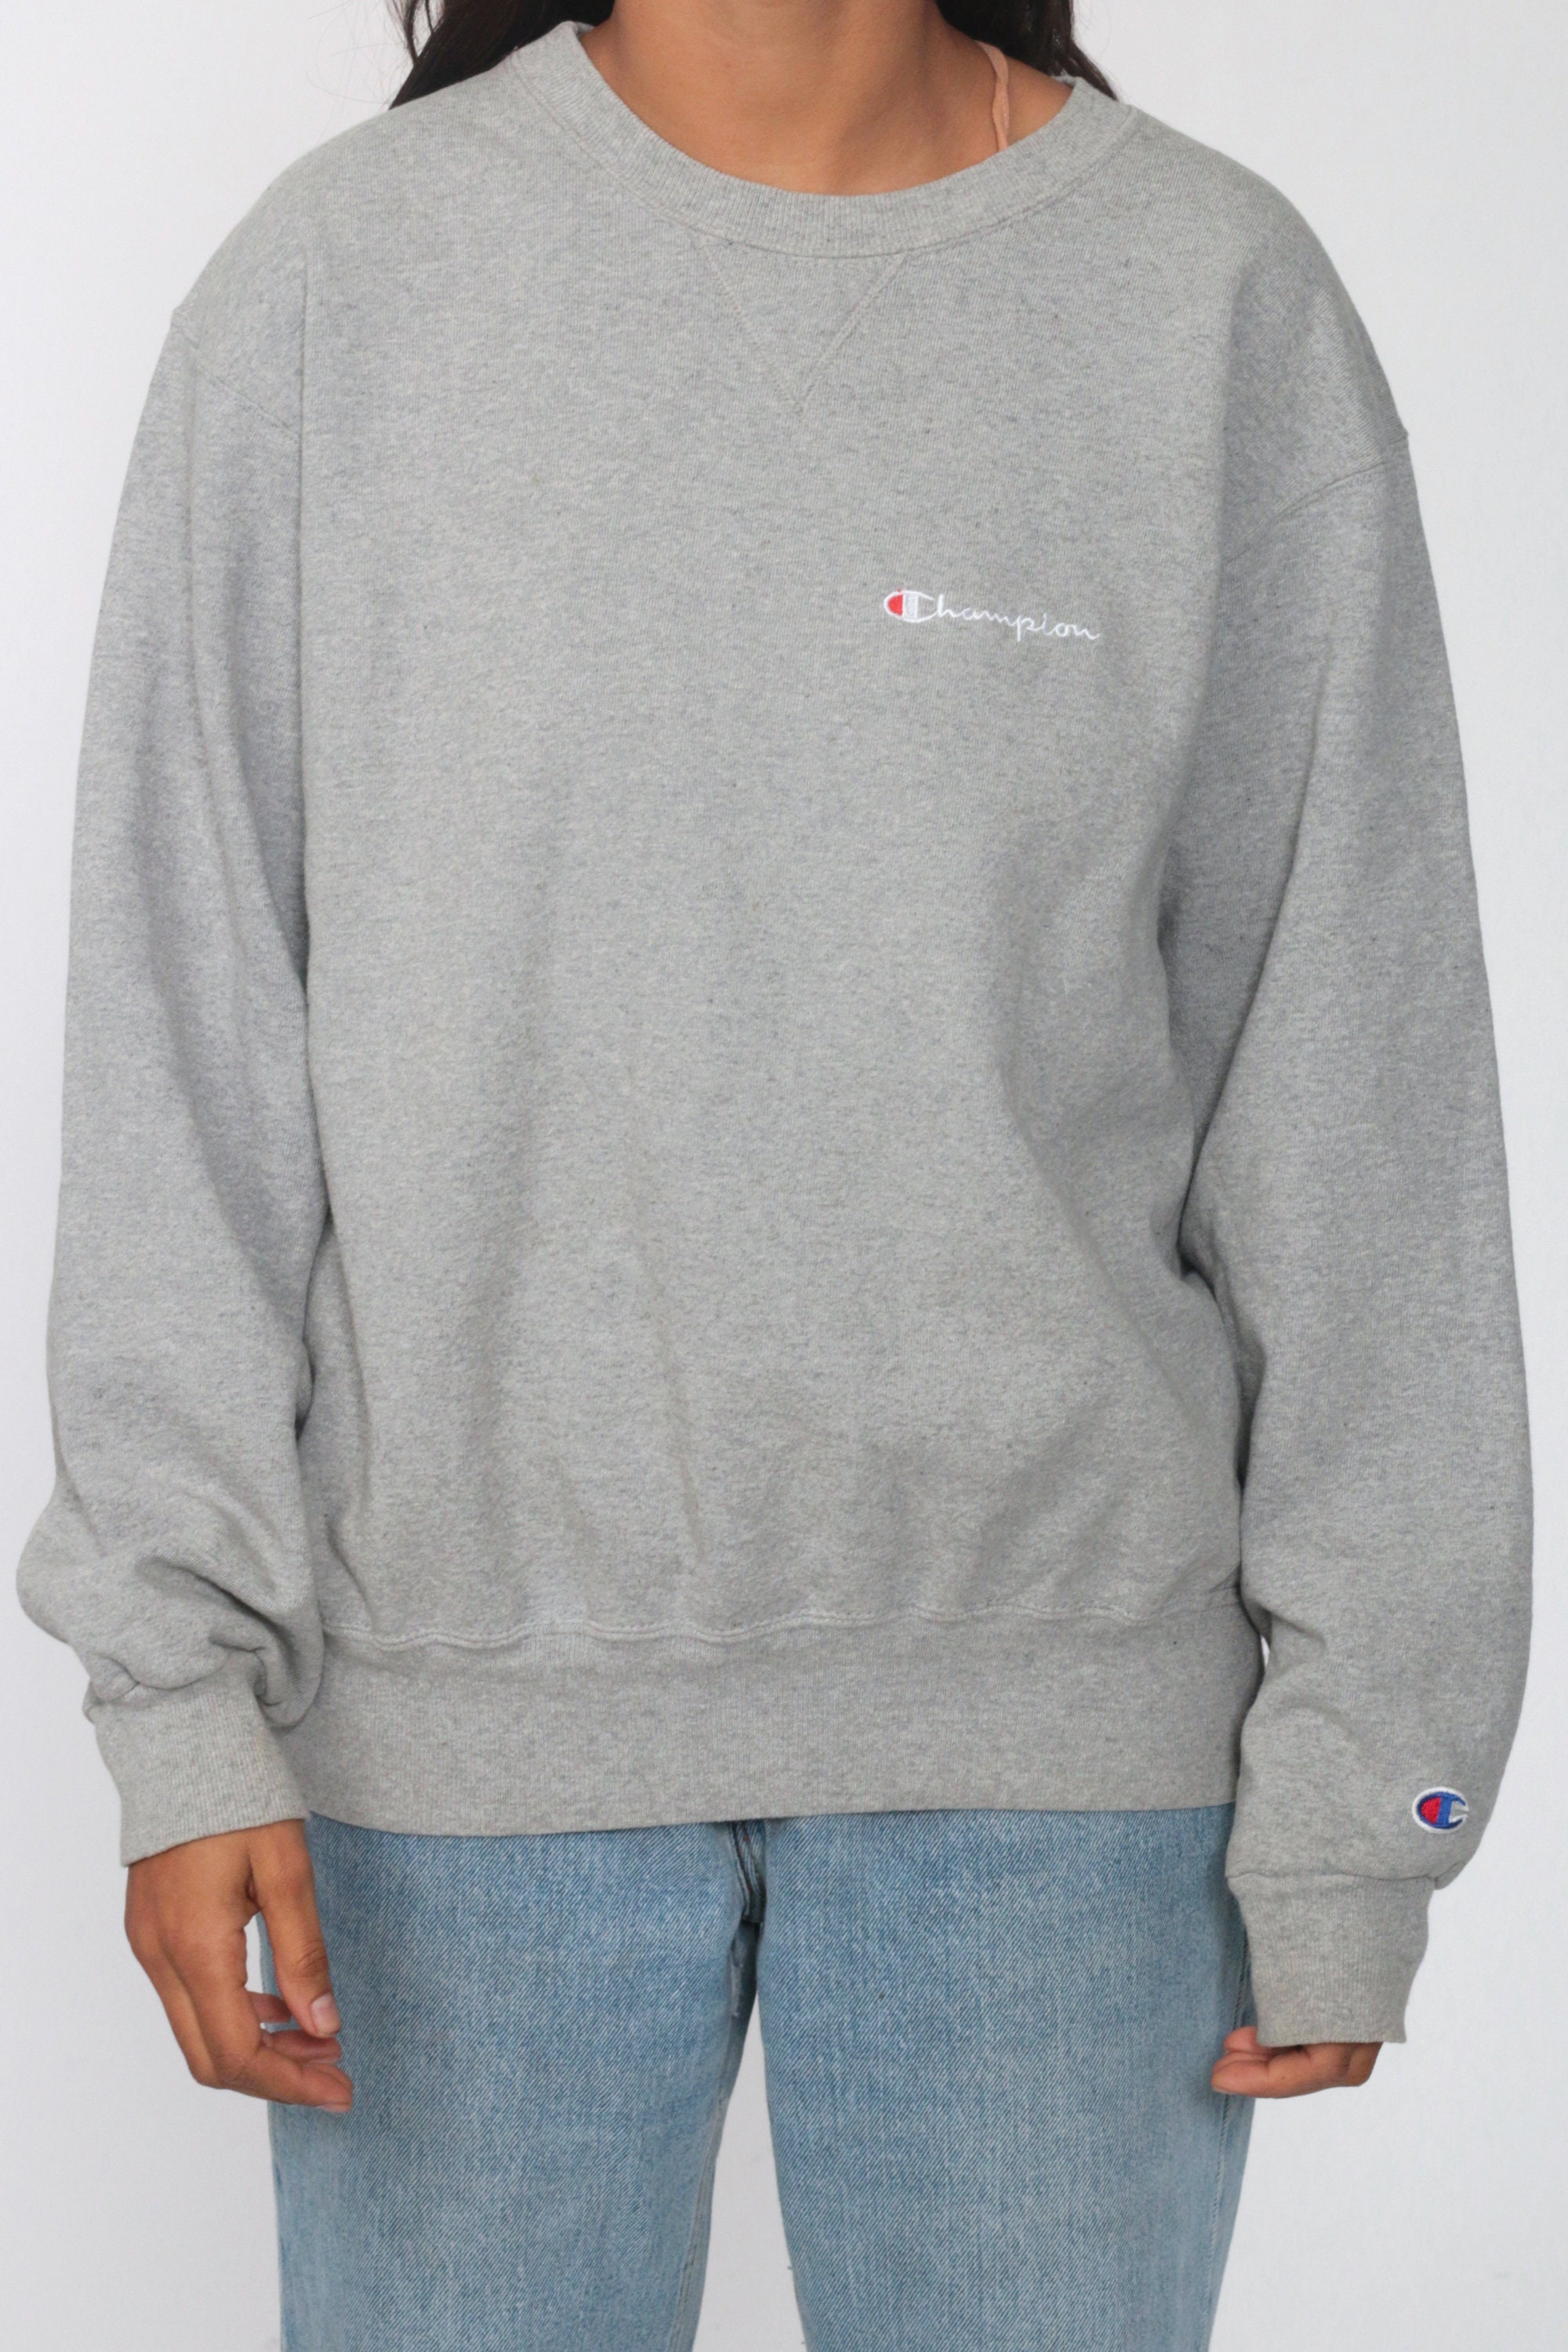 Champion Sweatshirt Grey Crewneck Pullover 90s Streetwear | Etsy